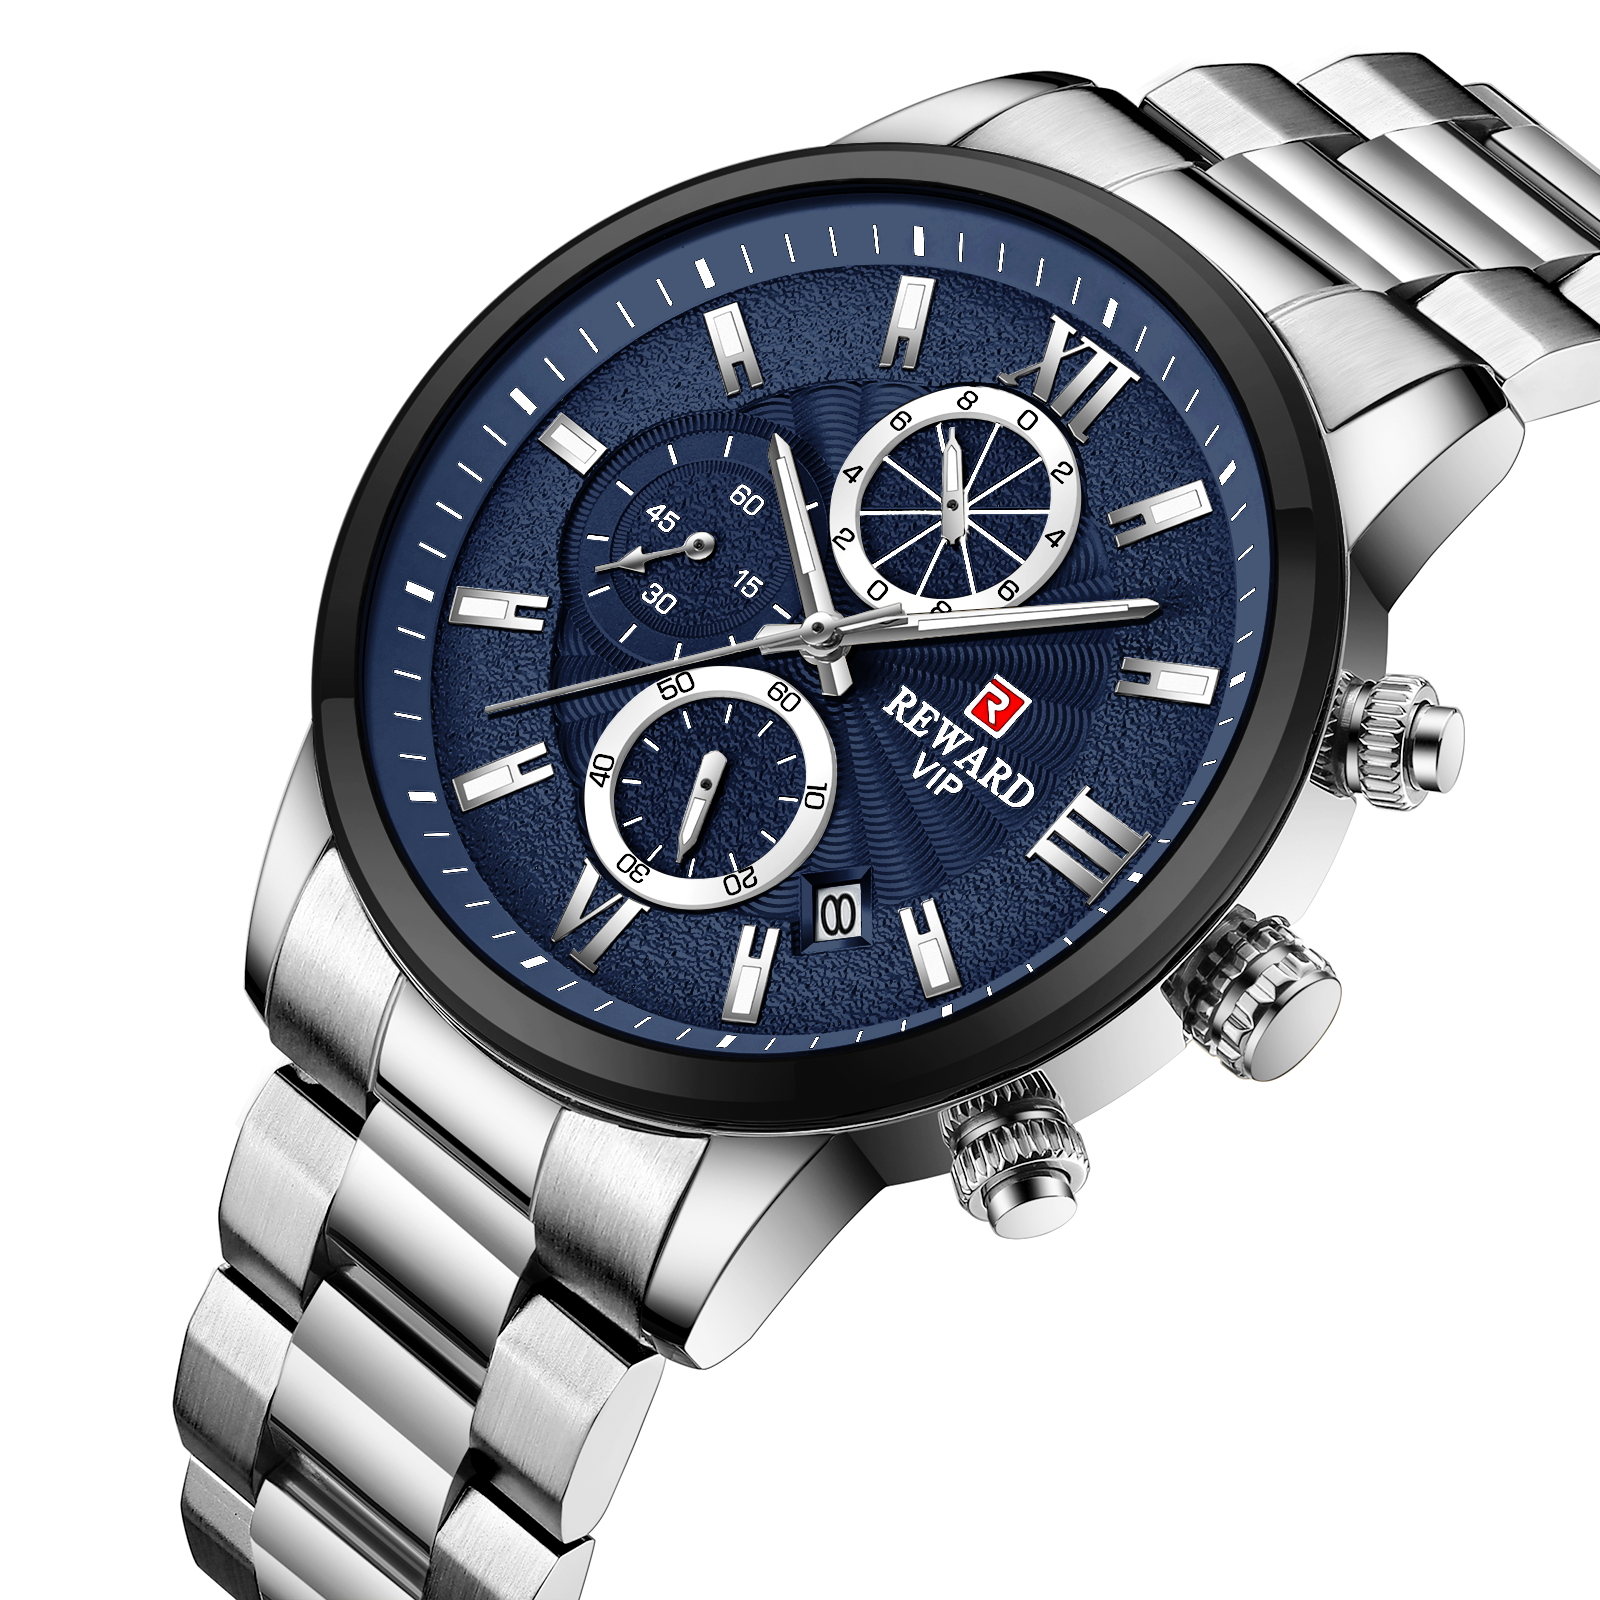 Promo Adidas Originals Cypher M1 Watch Stainless Steel - Jakarta Utara -  Slip Mart | Tokopedia